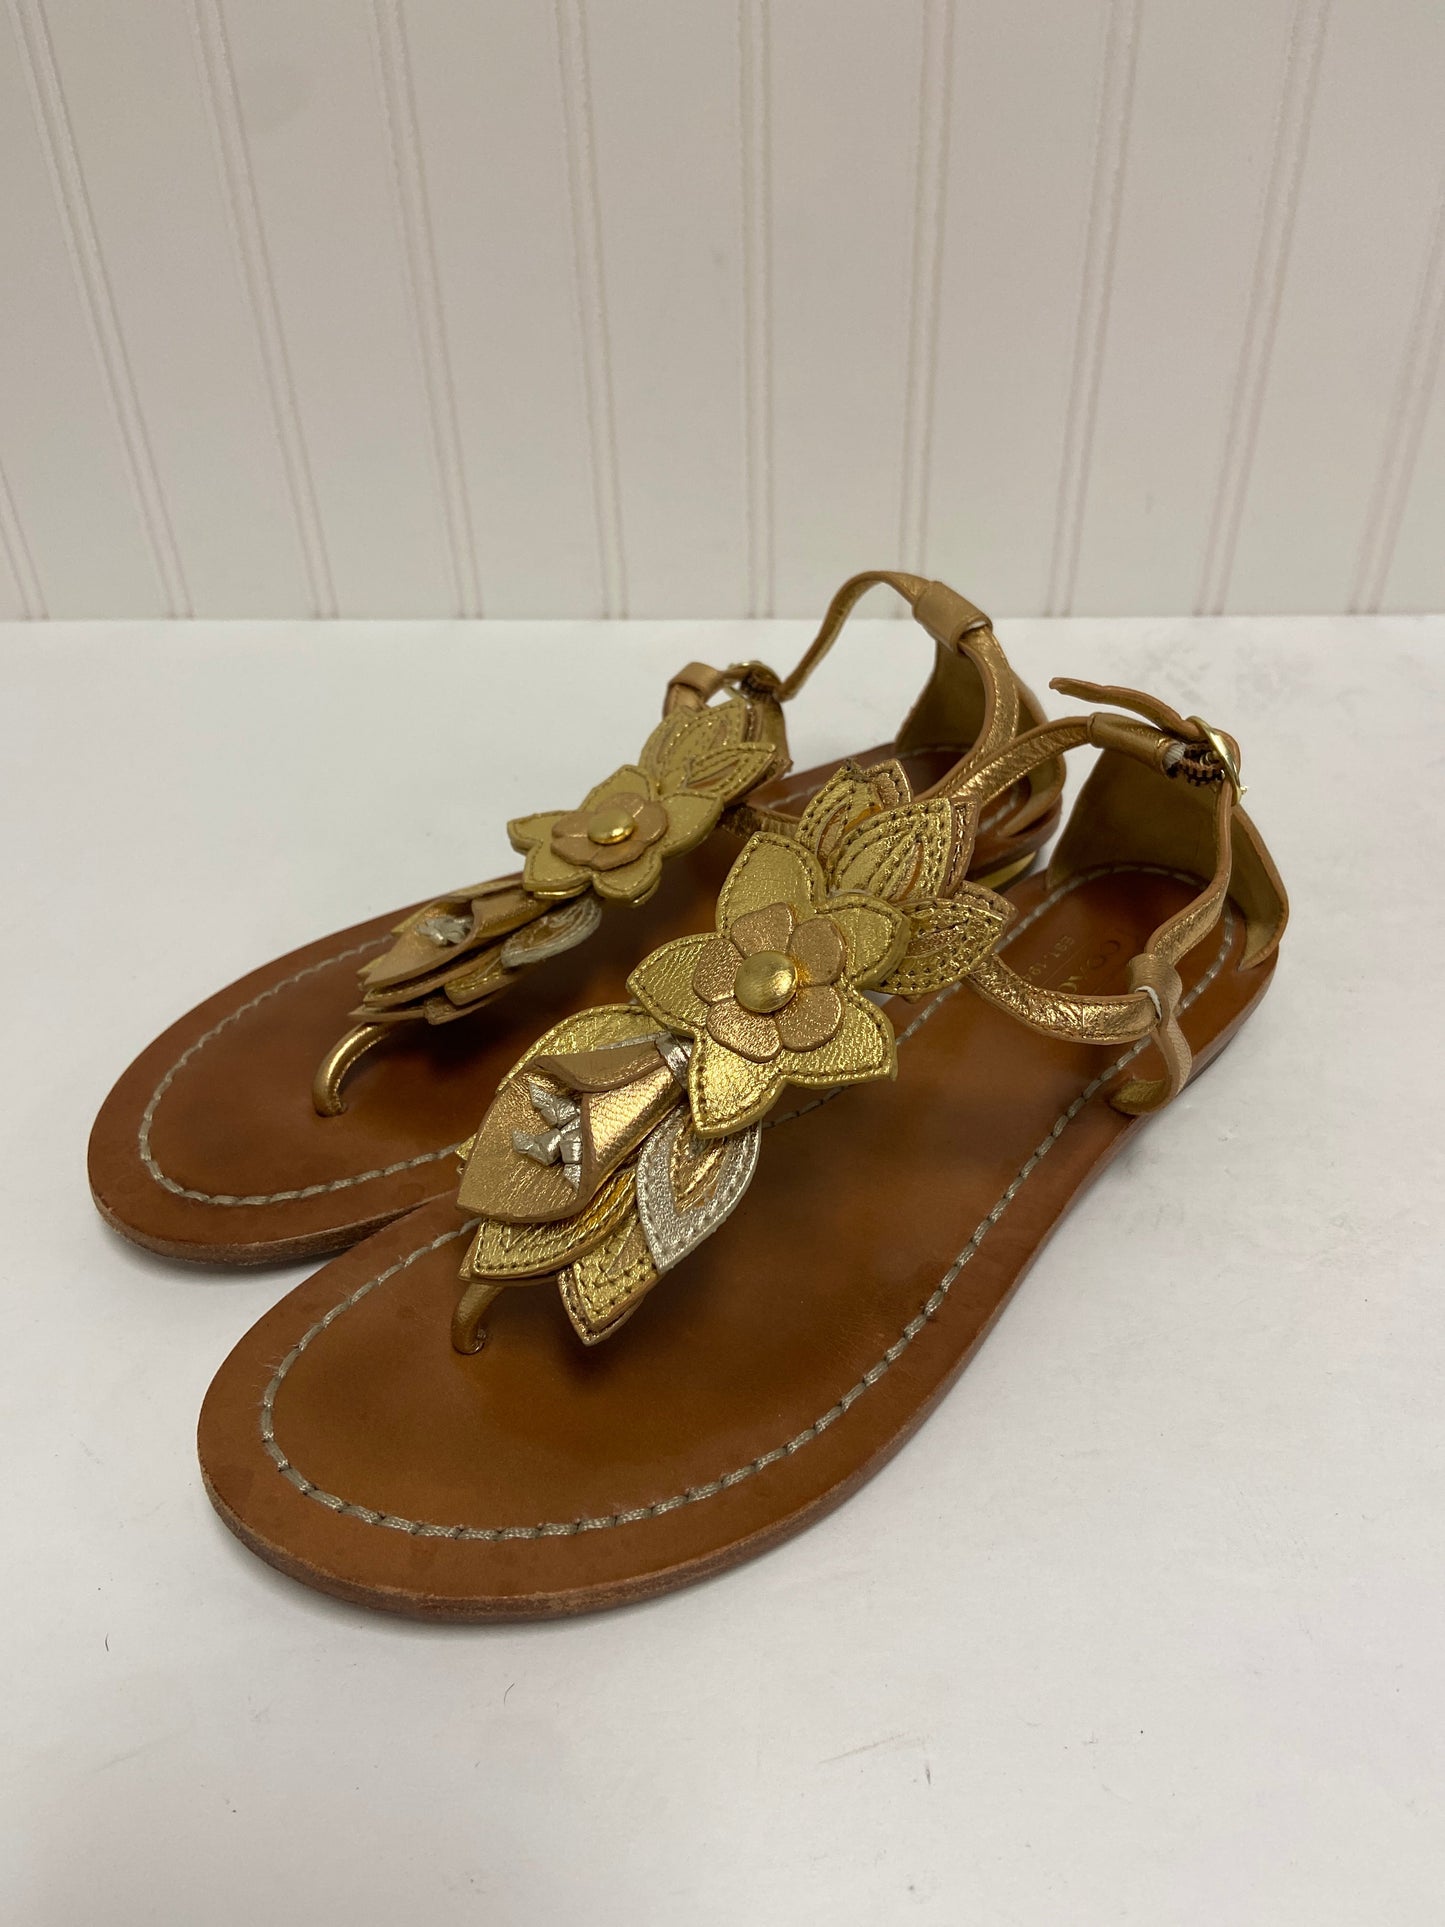 Gold Sandals Designer Coach, Size 7